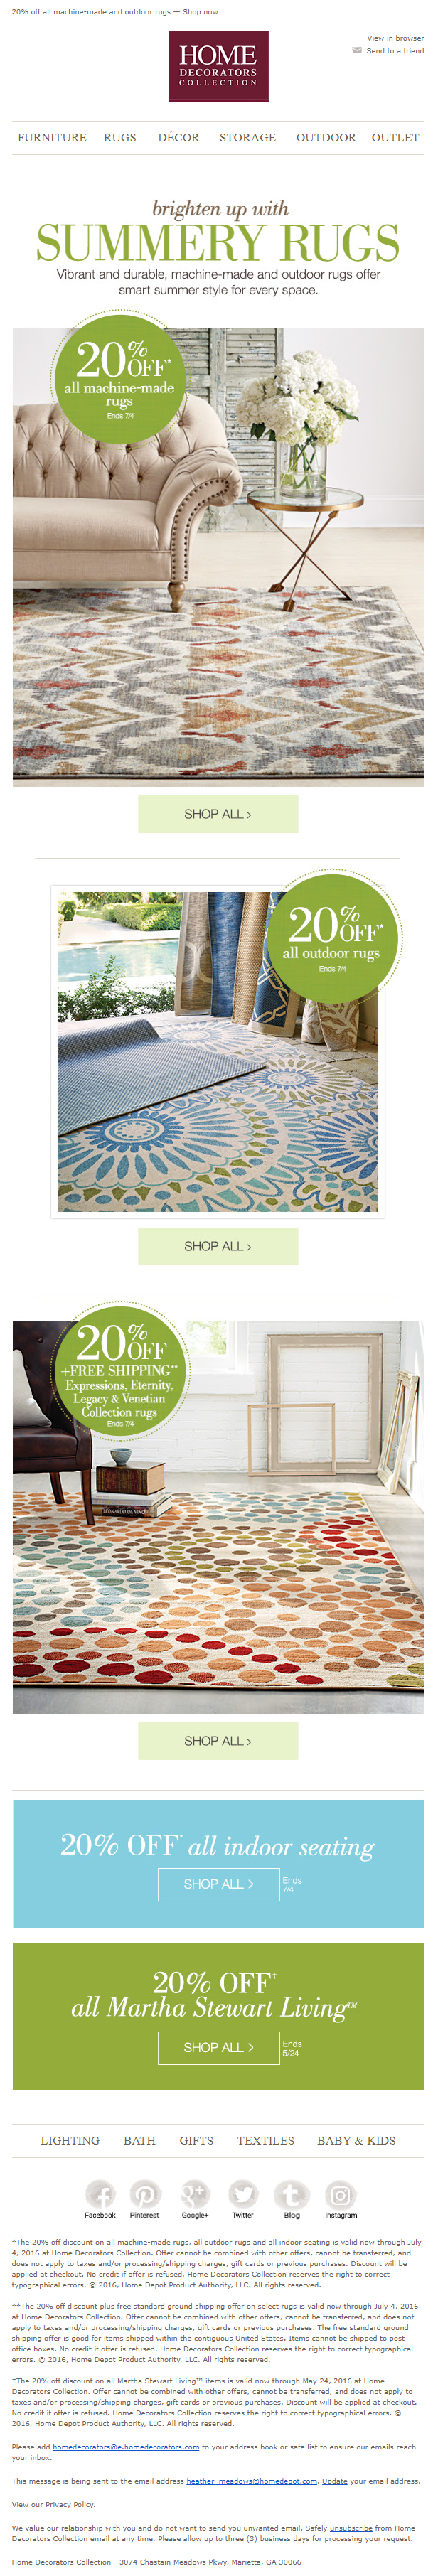 screenshot of summery rugs email